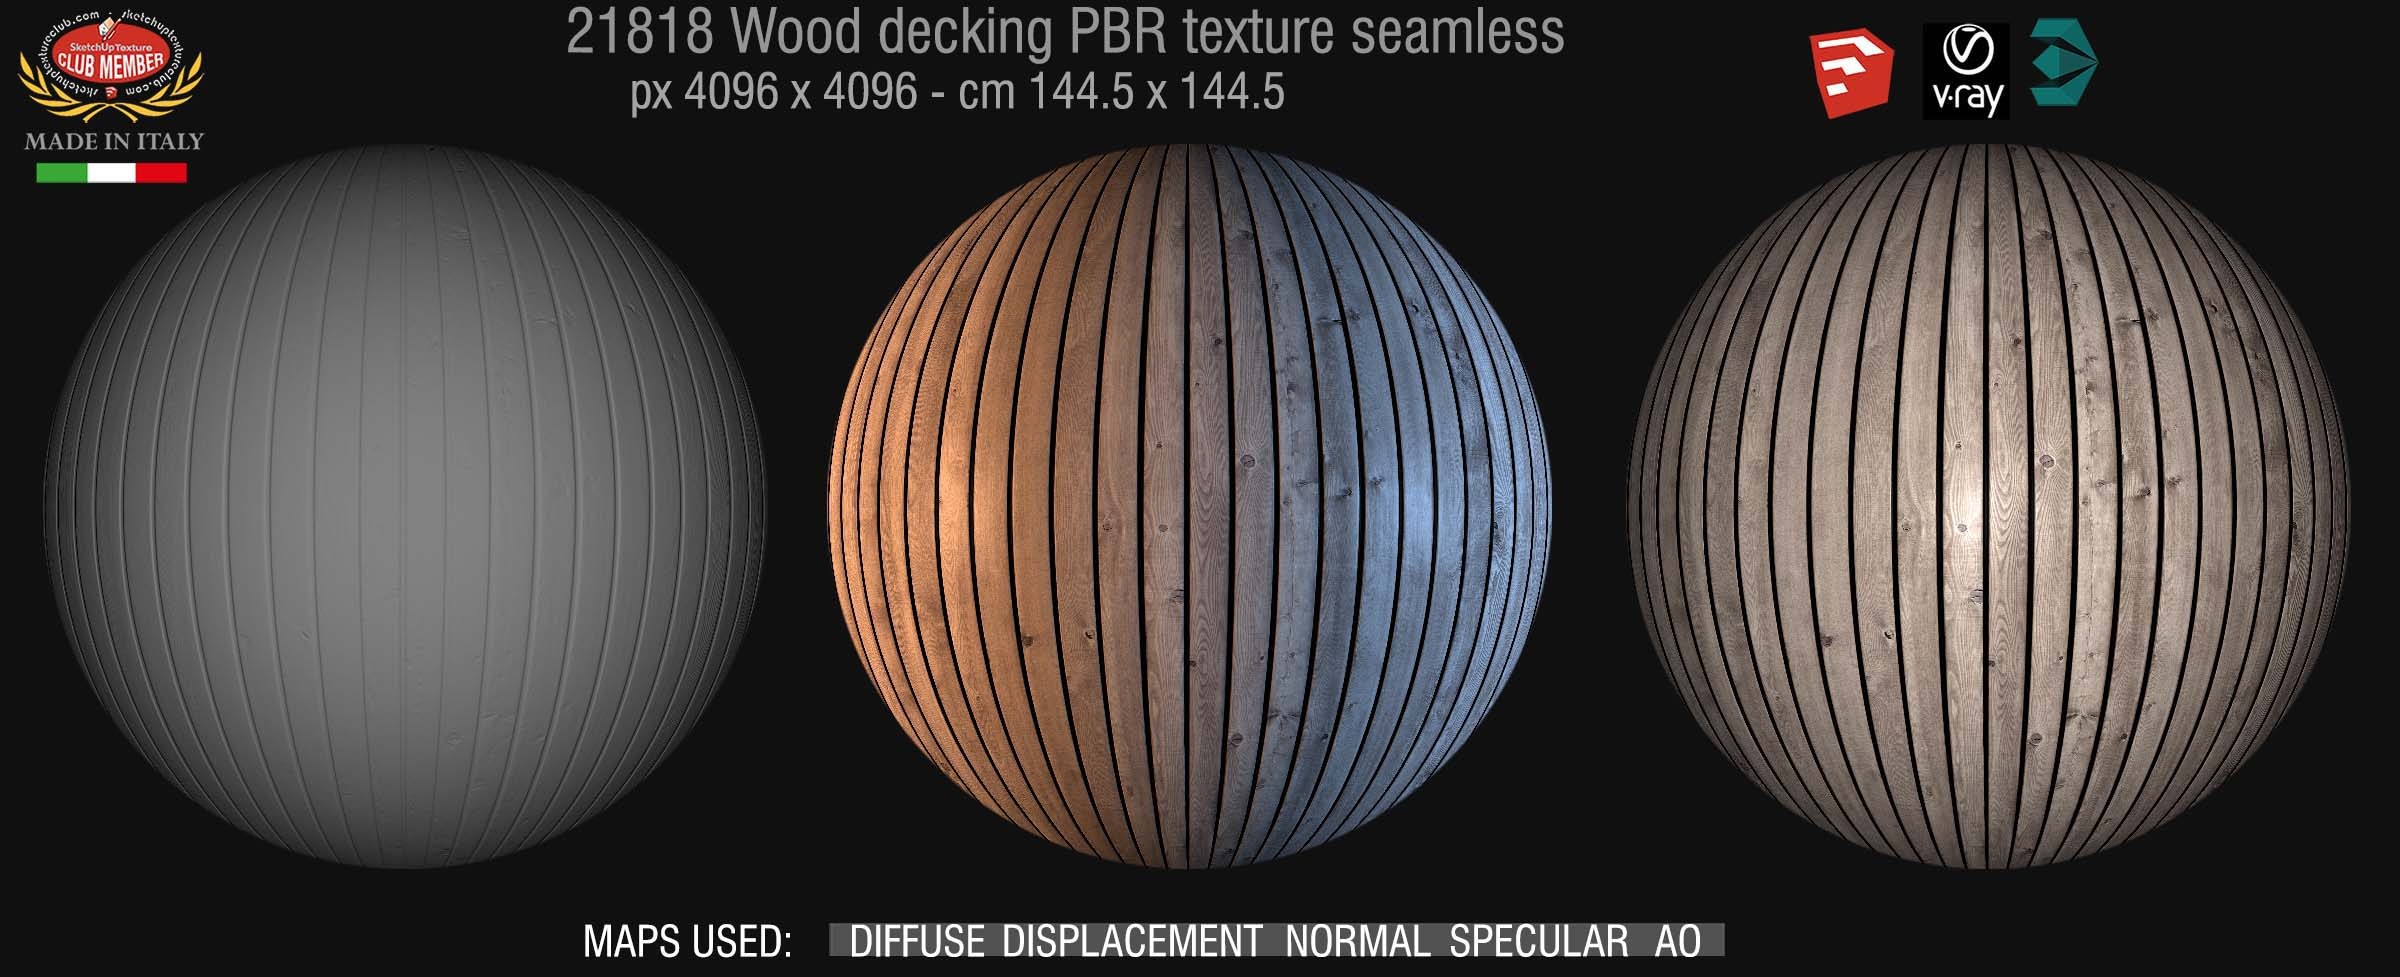 21818 wood decking PBR texture seamless DEMO